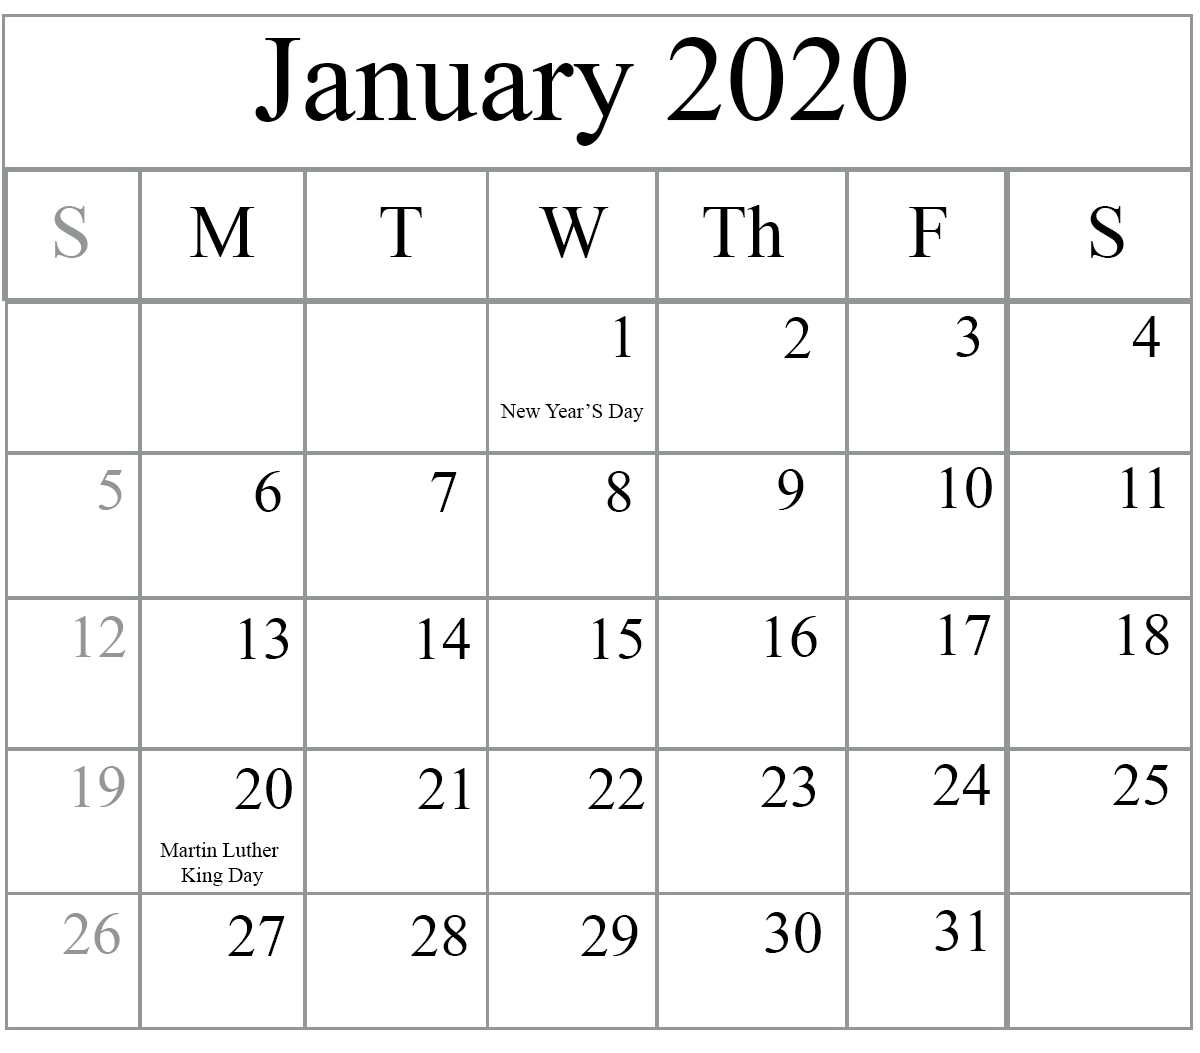 January 2020 Calendar Pdf | Free Printable Calendar Dashing Microsoft Word Calendar Template 2020